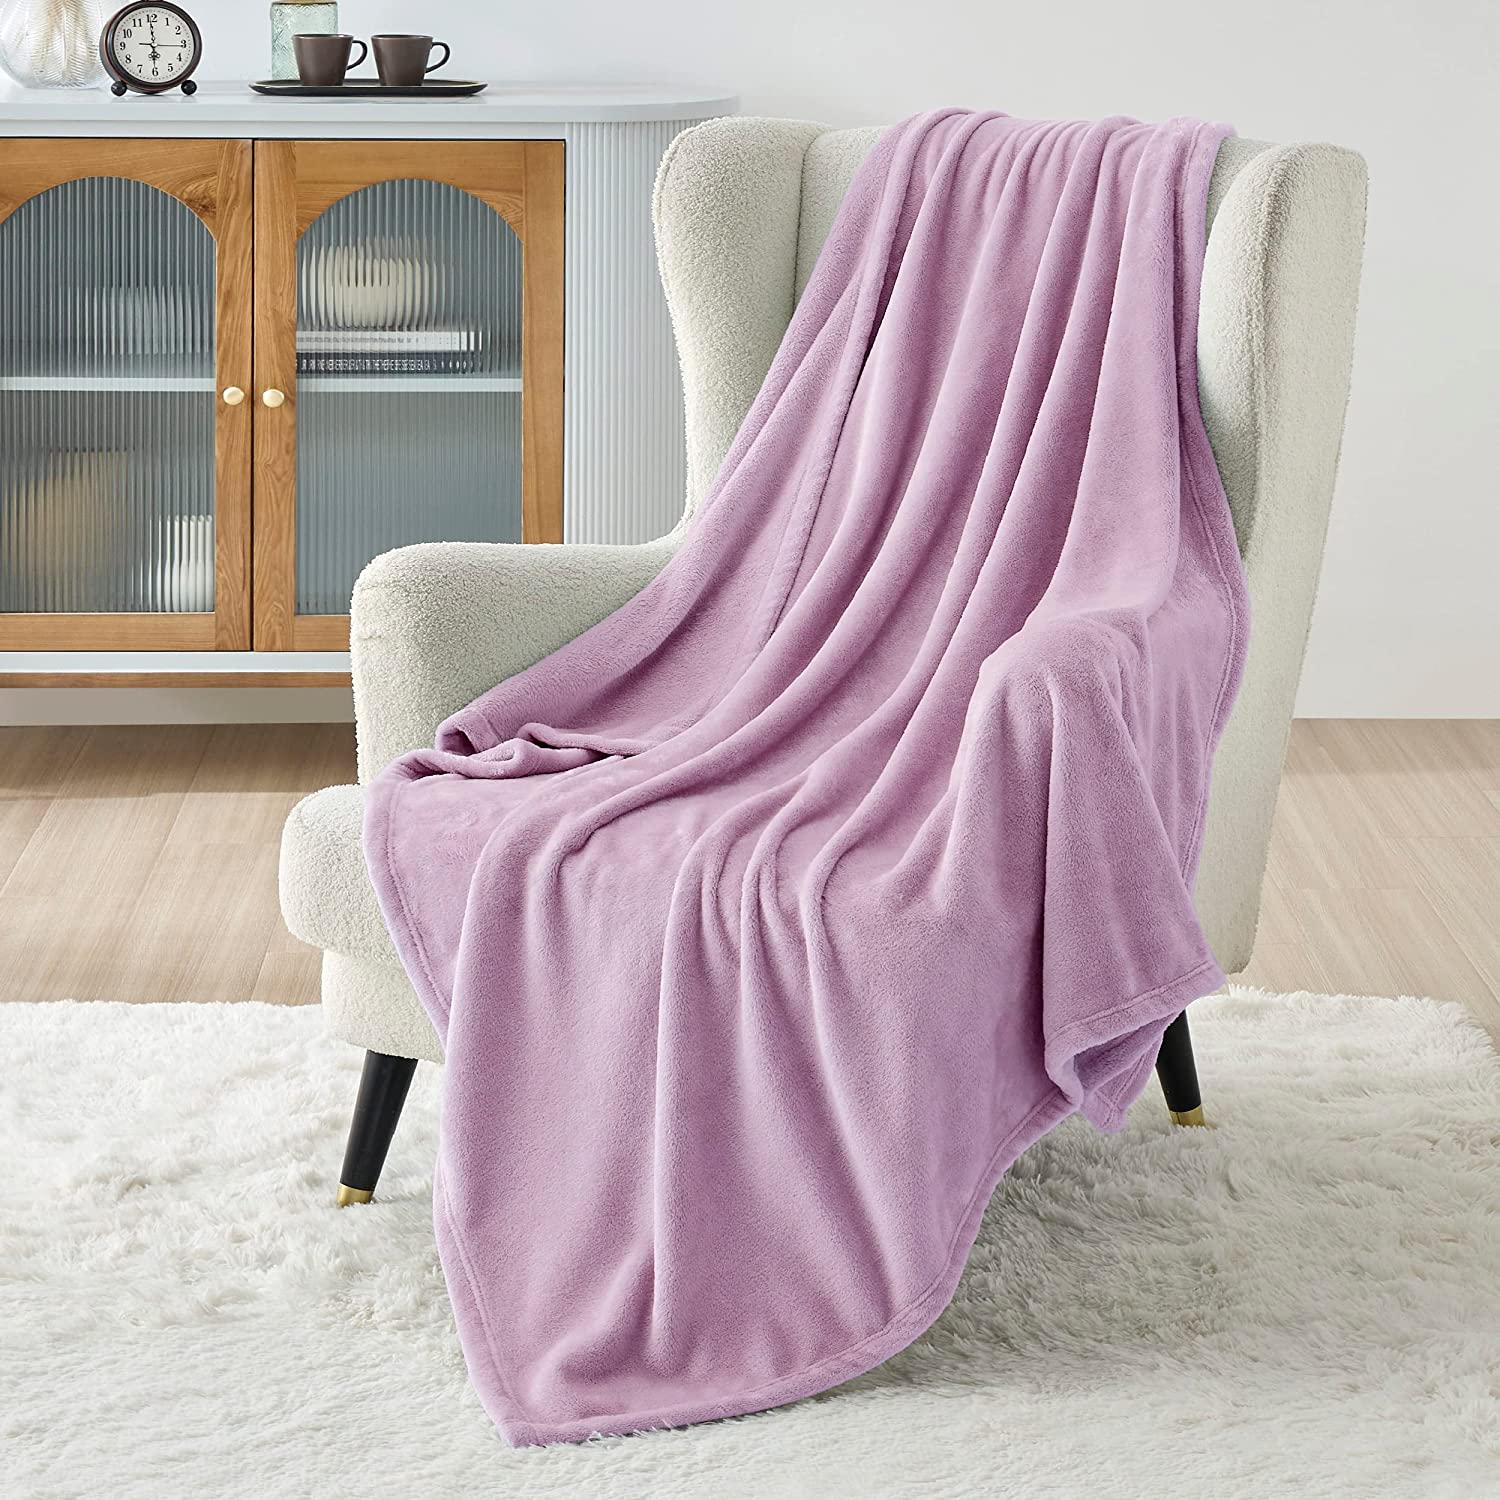 Bedsure Fleece Blankets Twin Size Grey - 300GSM Lightweight Plush Fuzzy  Cozy Soft, 60x80 inches 